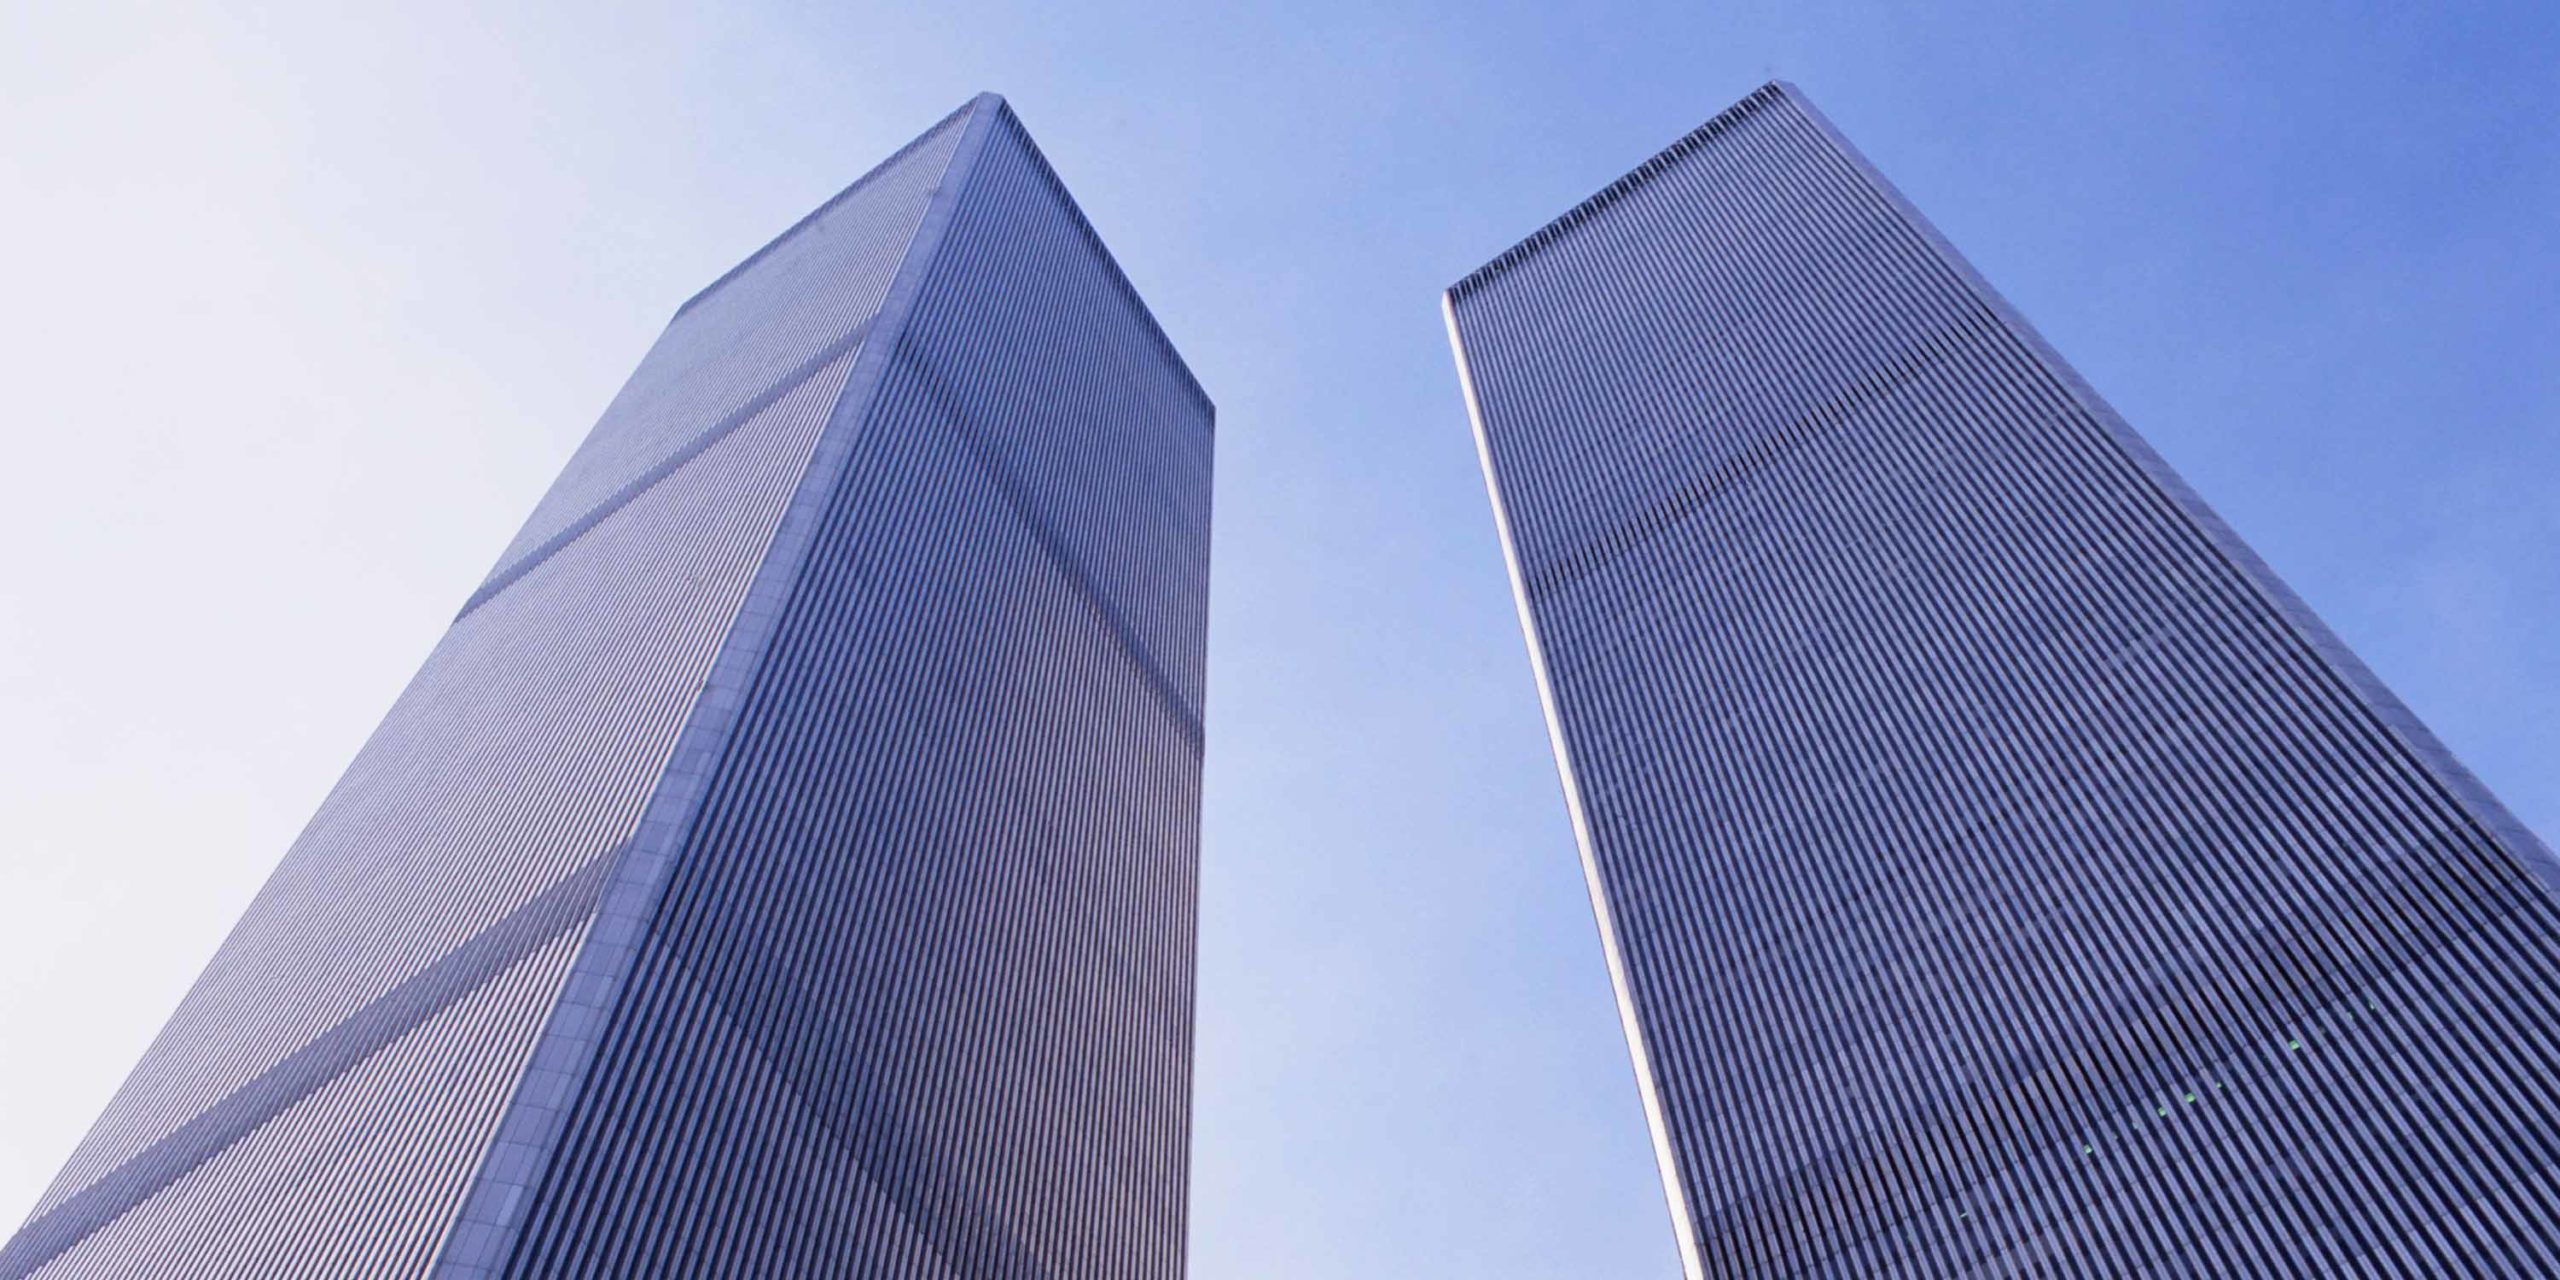 World Trade Center Towers